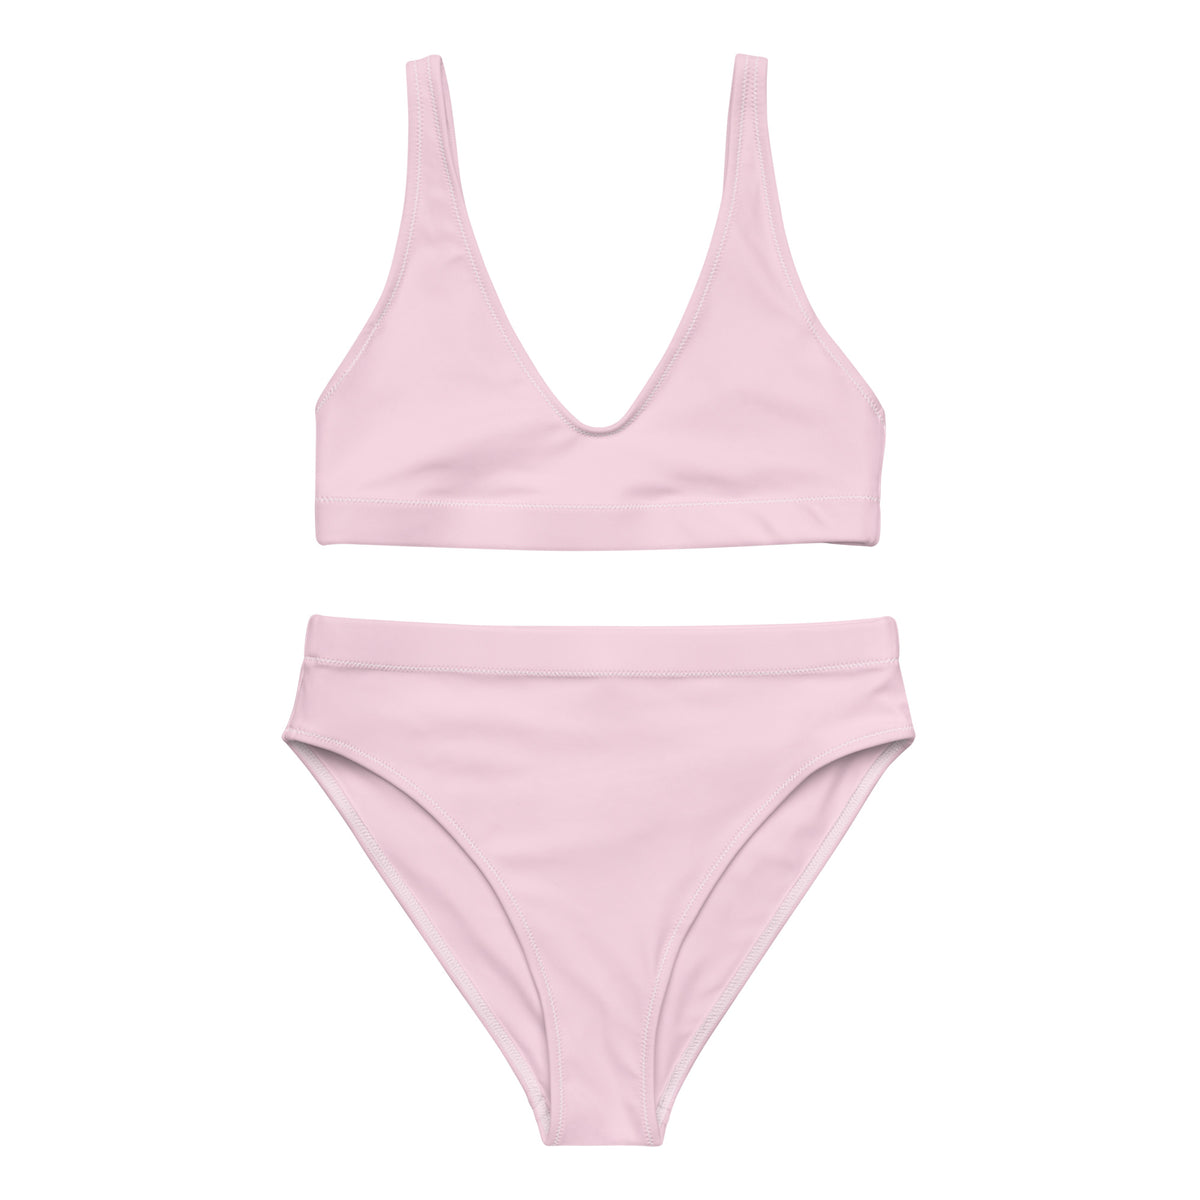 Pig Pink Upstormed High-Waisted Bikini